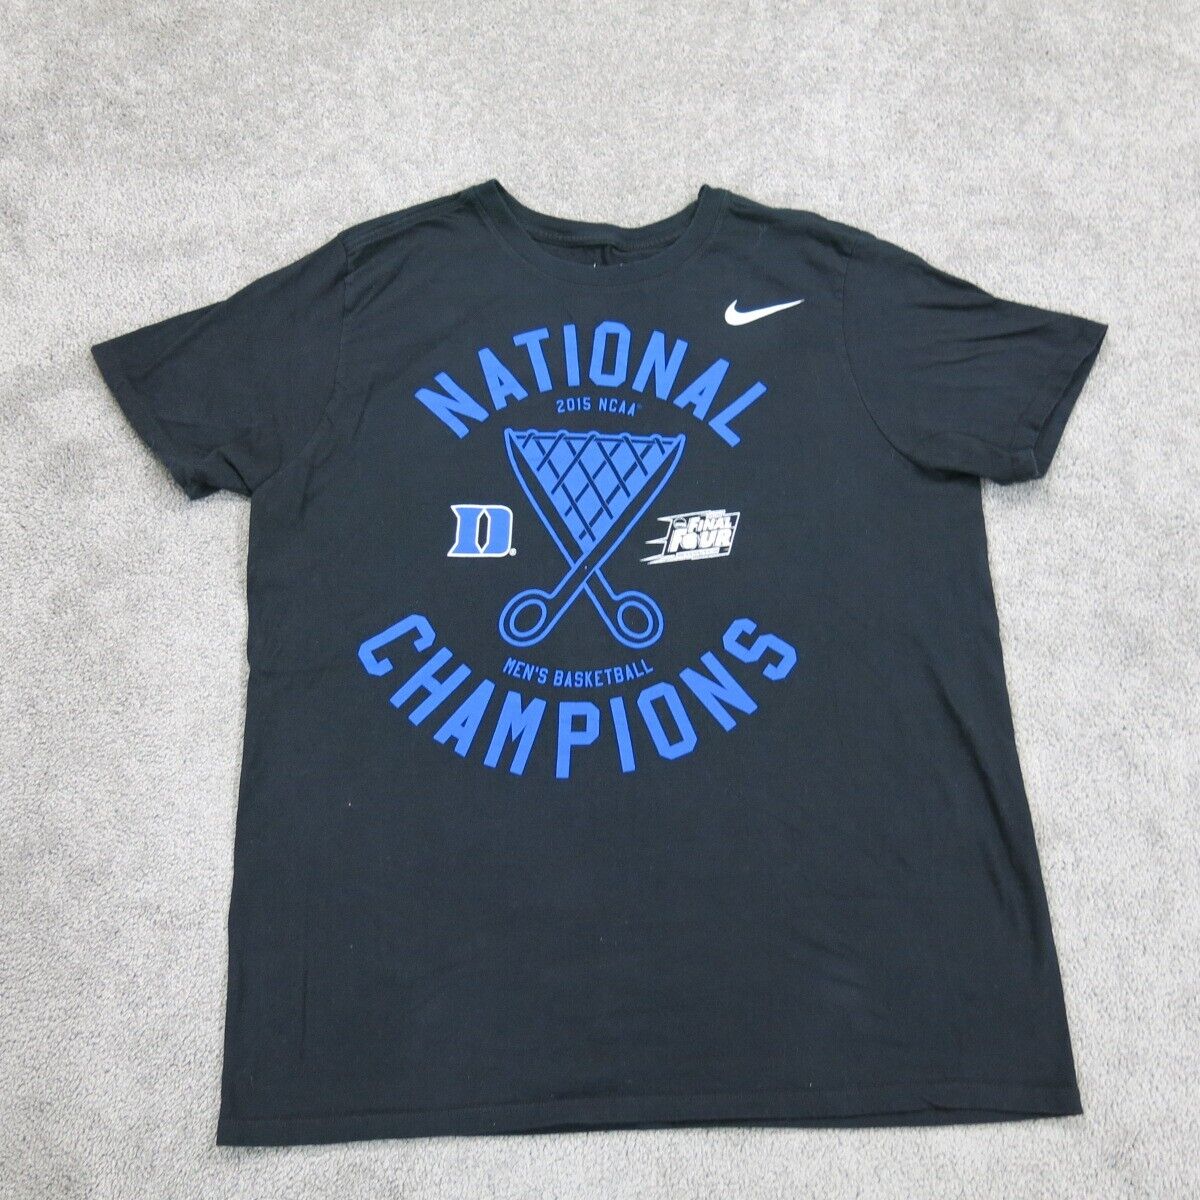 The Nike Tee Men Crew Neck T Shirt Athletic Cut National Championship Black SZ L